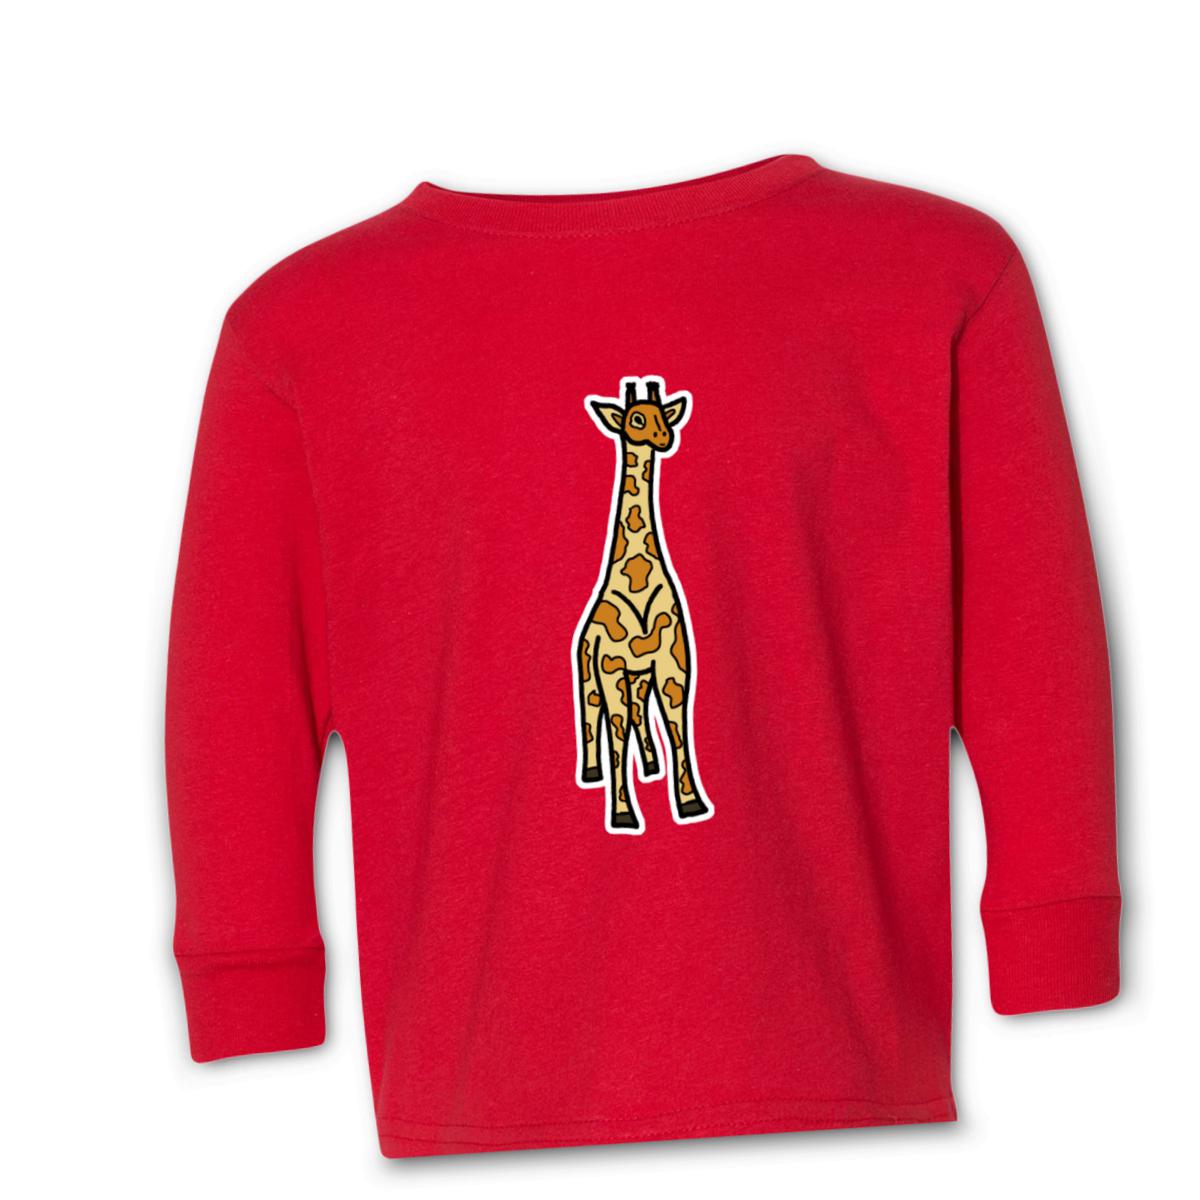 Toy Giraffe Kid's Long Sleeve Tee Small red